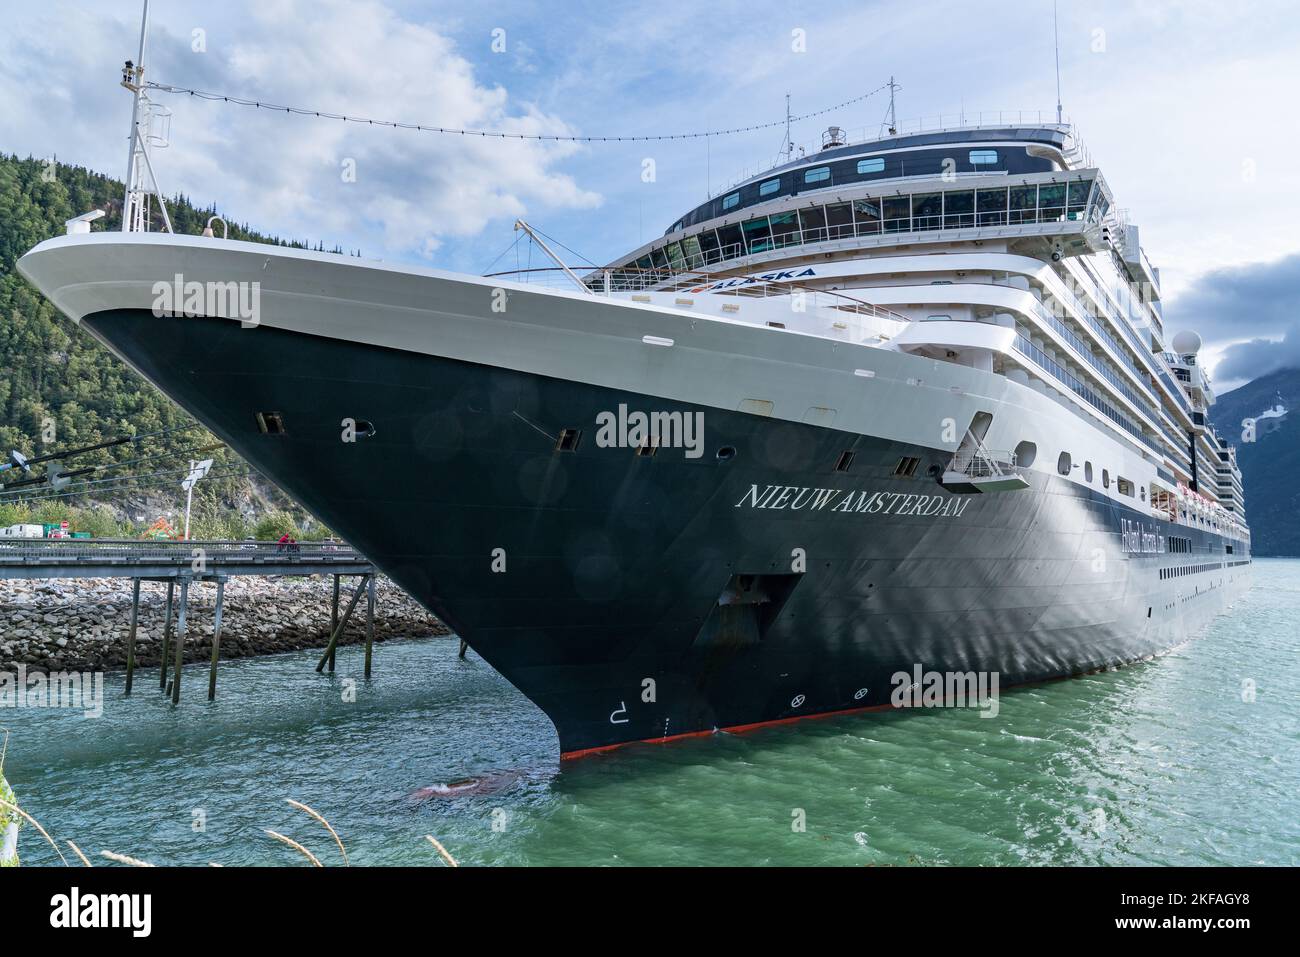 Skagway, AK - September 7, 2022: Holland America cruise ship Nieuw Amsterdam docked in the port of Skagway, Alaska Stock Photo